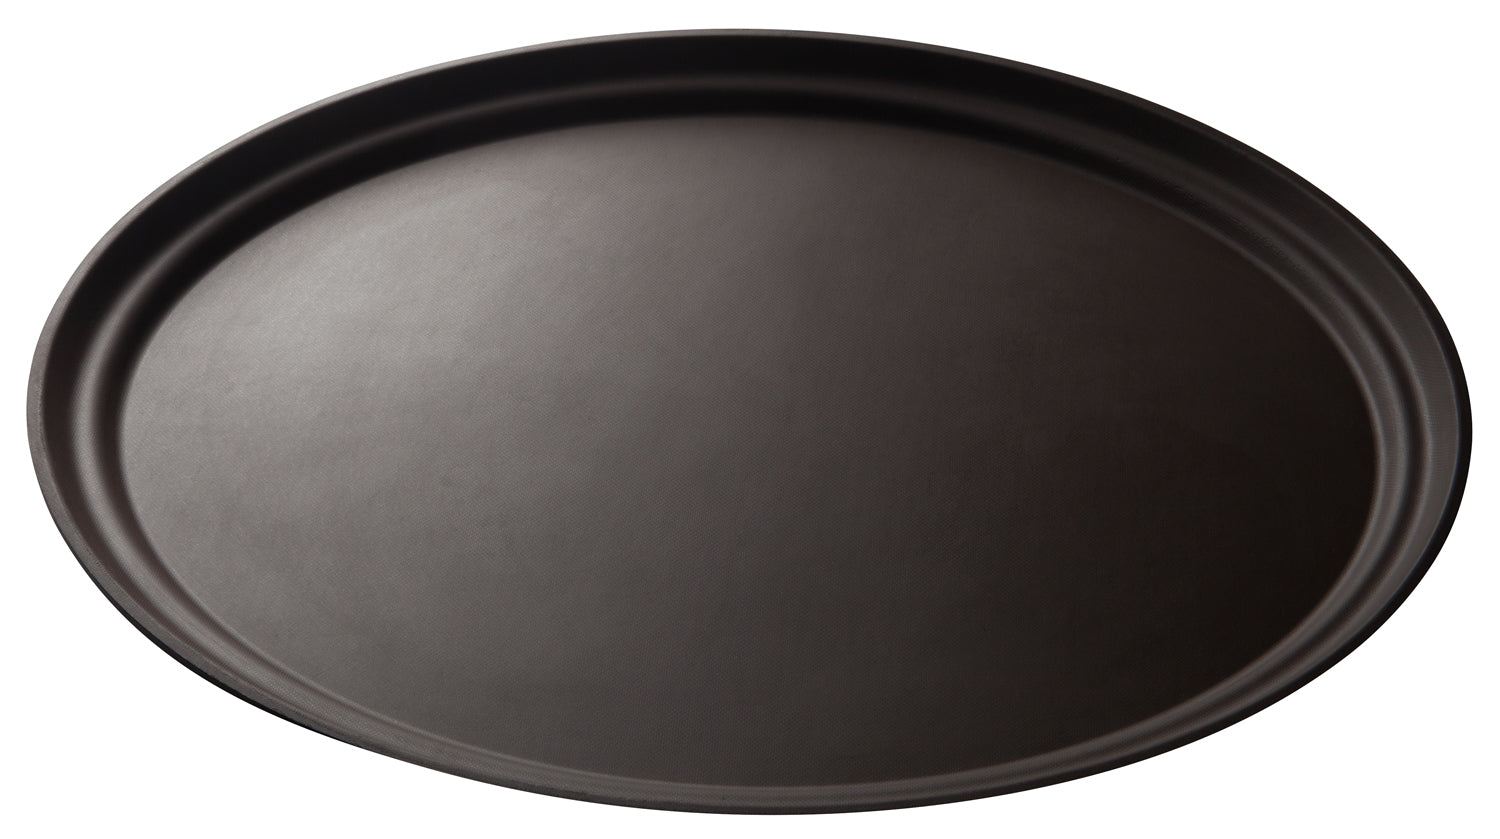 Cambro Camtread® Fiberglass Tablett mit rutschfester Gummioberfläche, oval – niedriges Profil 56 x 75 cm, 6 Stück im Karton - 2700CT138